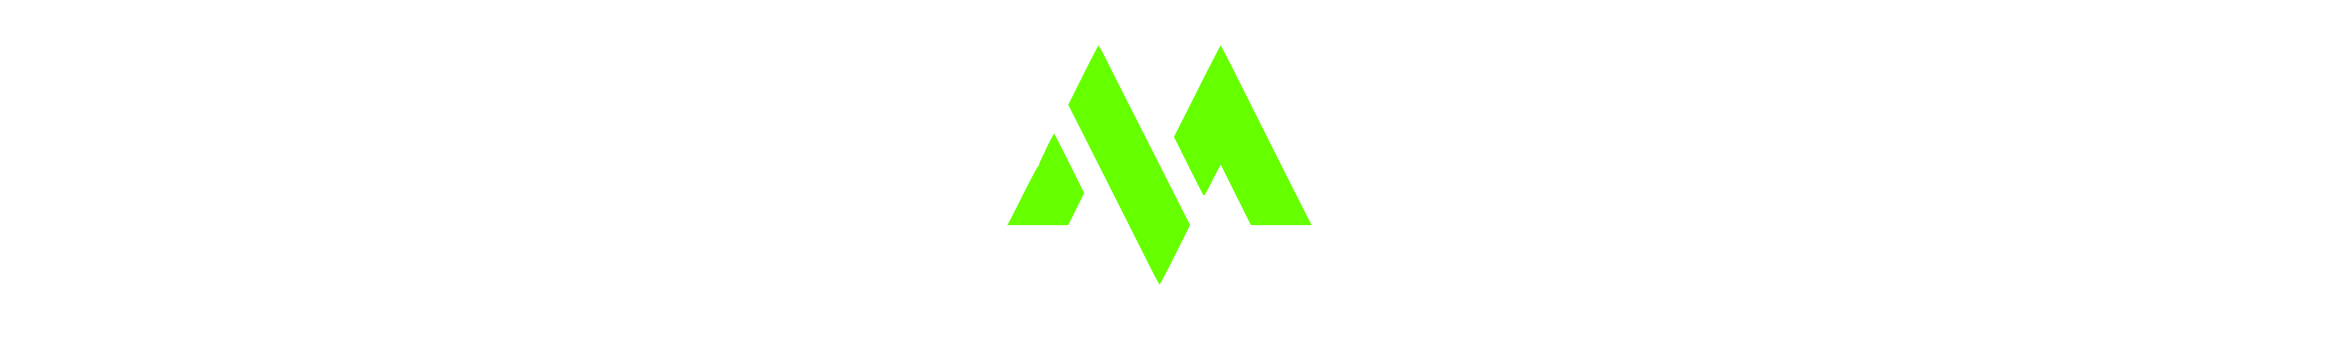 Megagon Ventures Logo